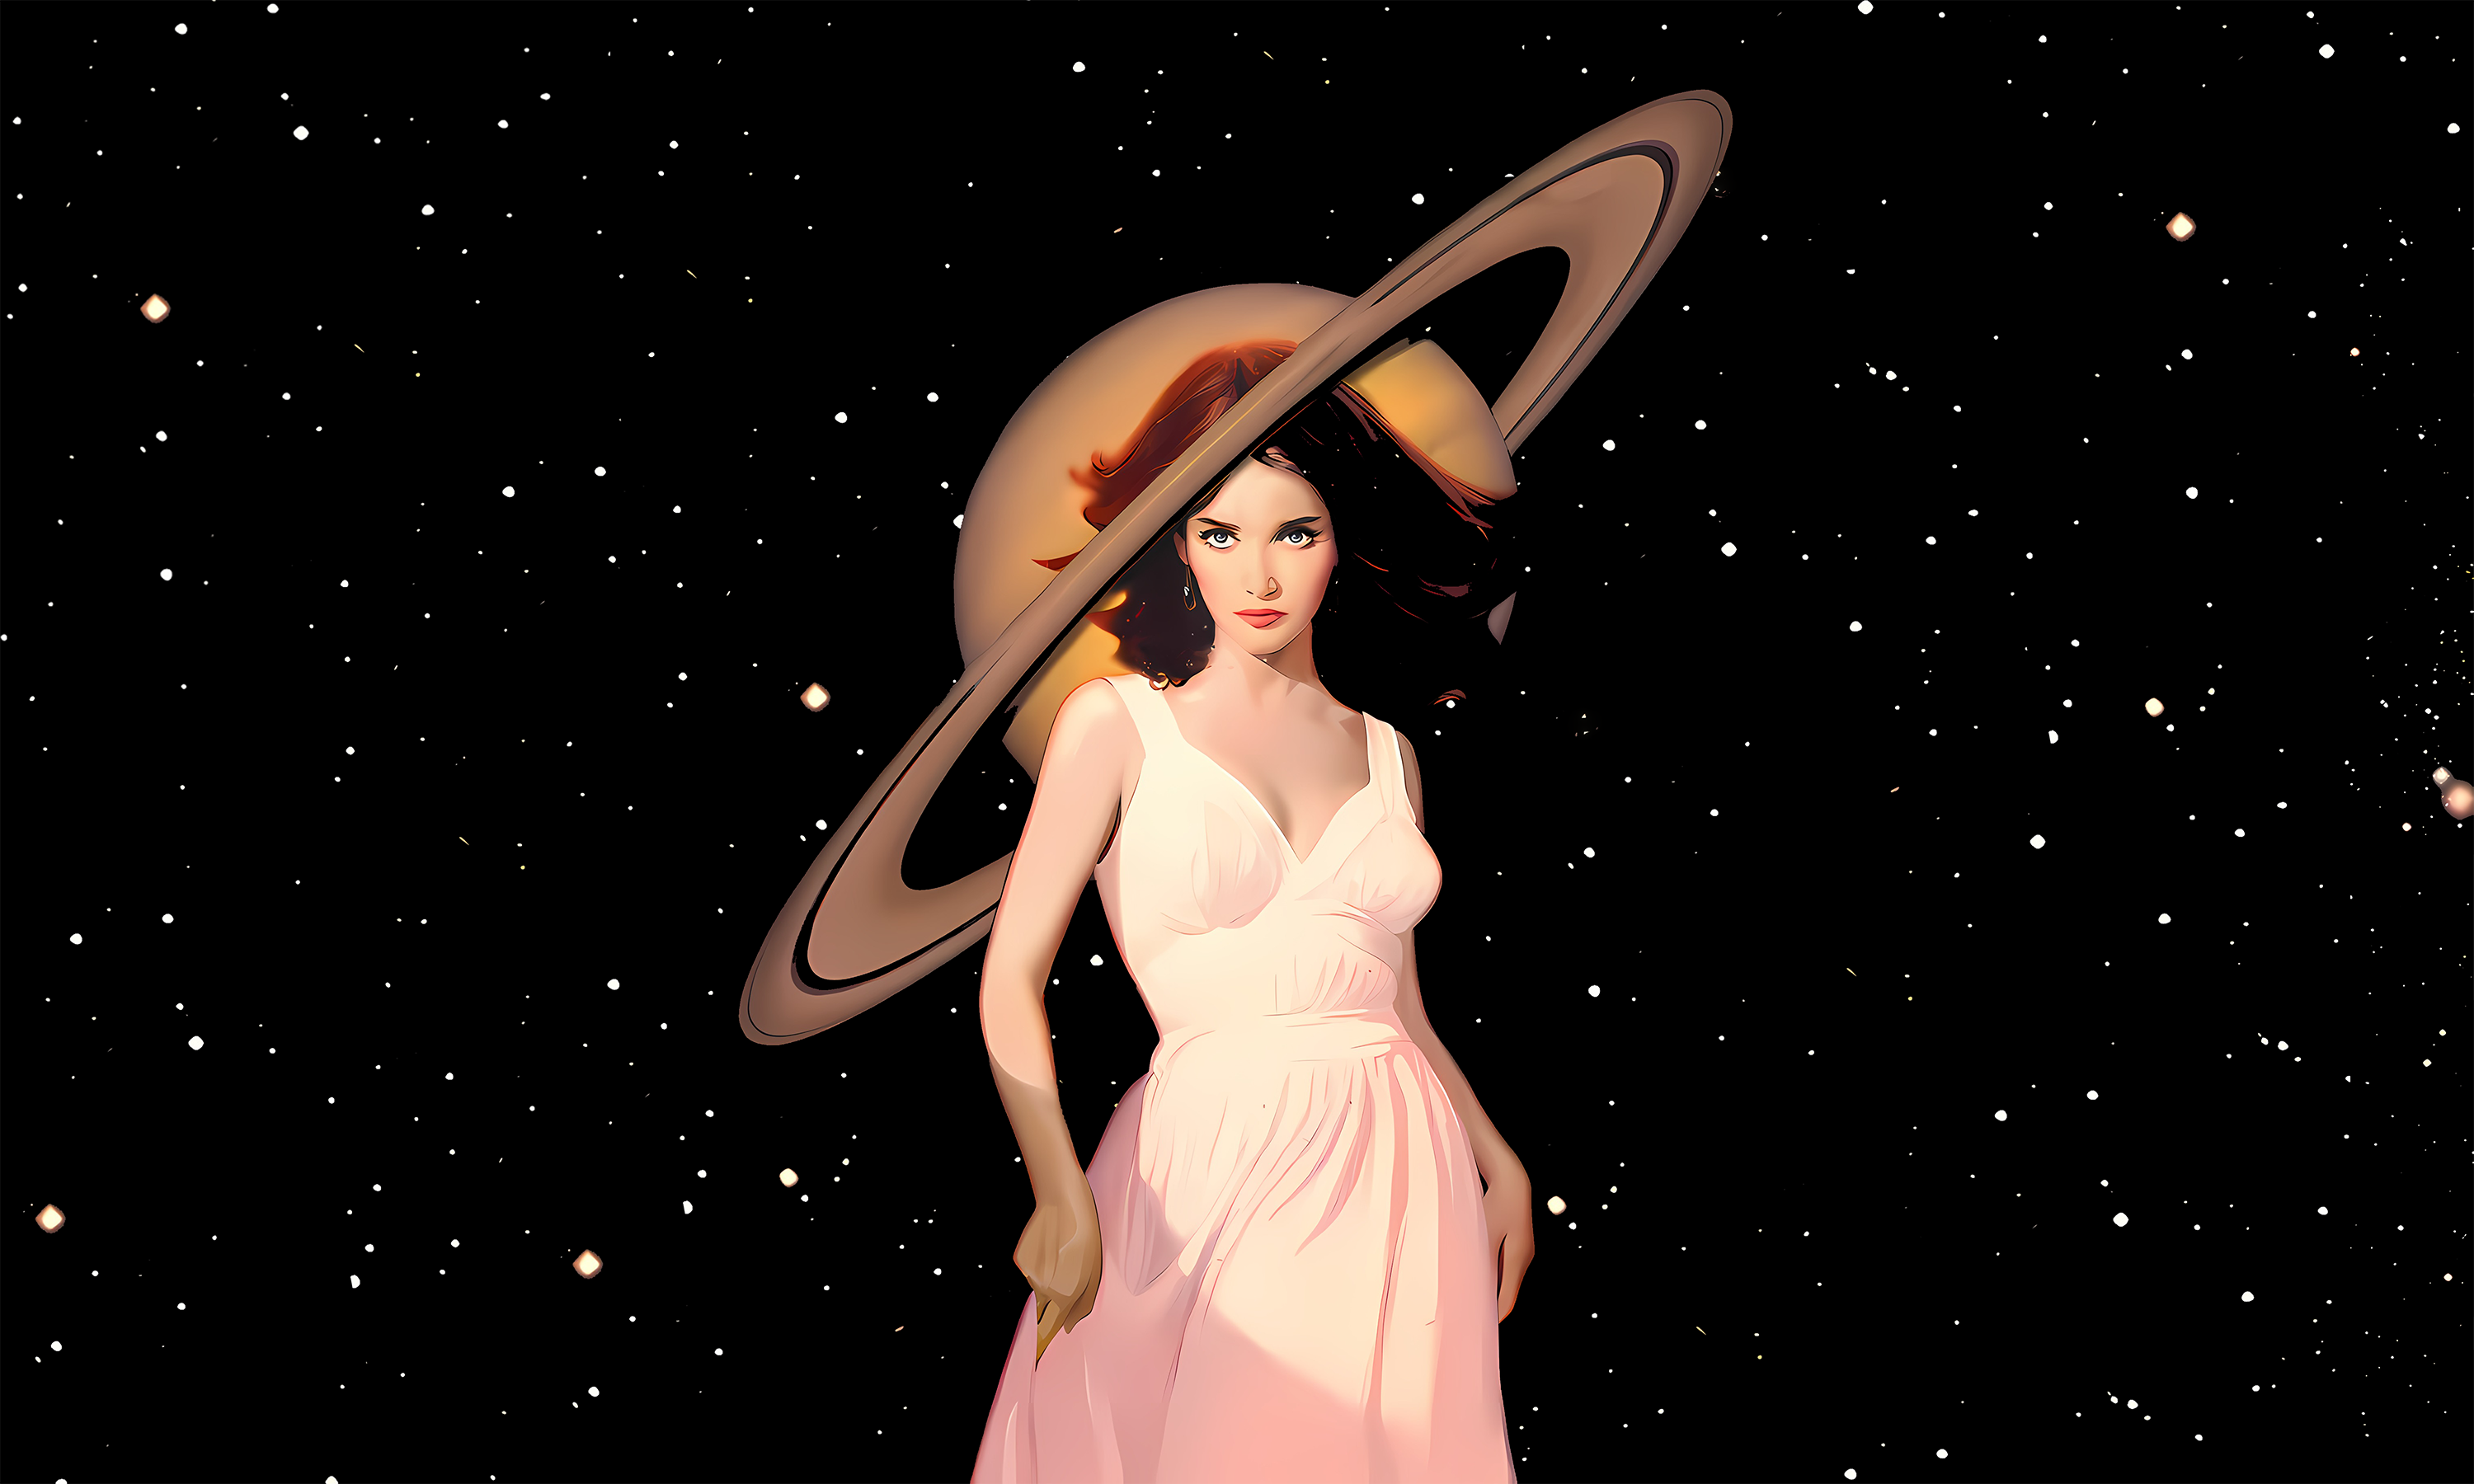 General 3000x1800 Saturn women space stars simple background dress planet artwork